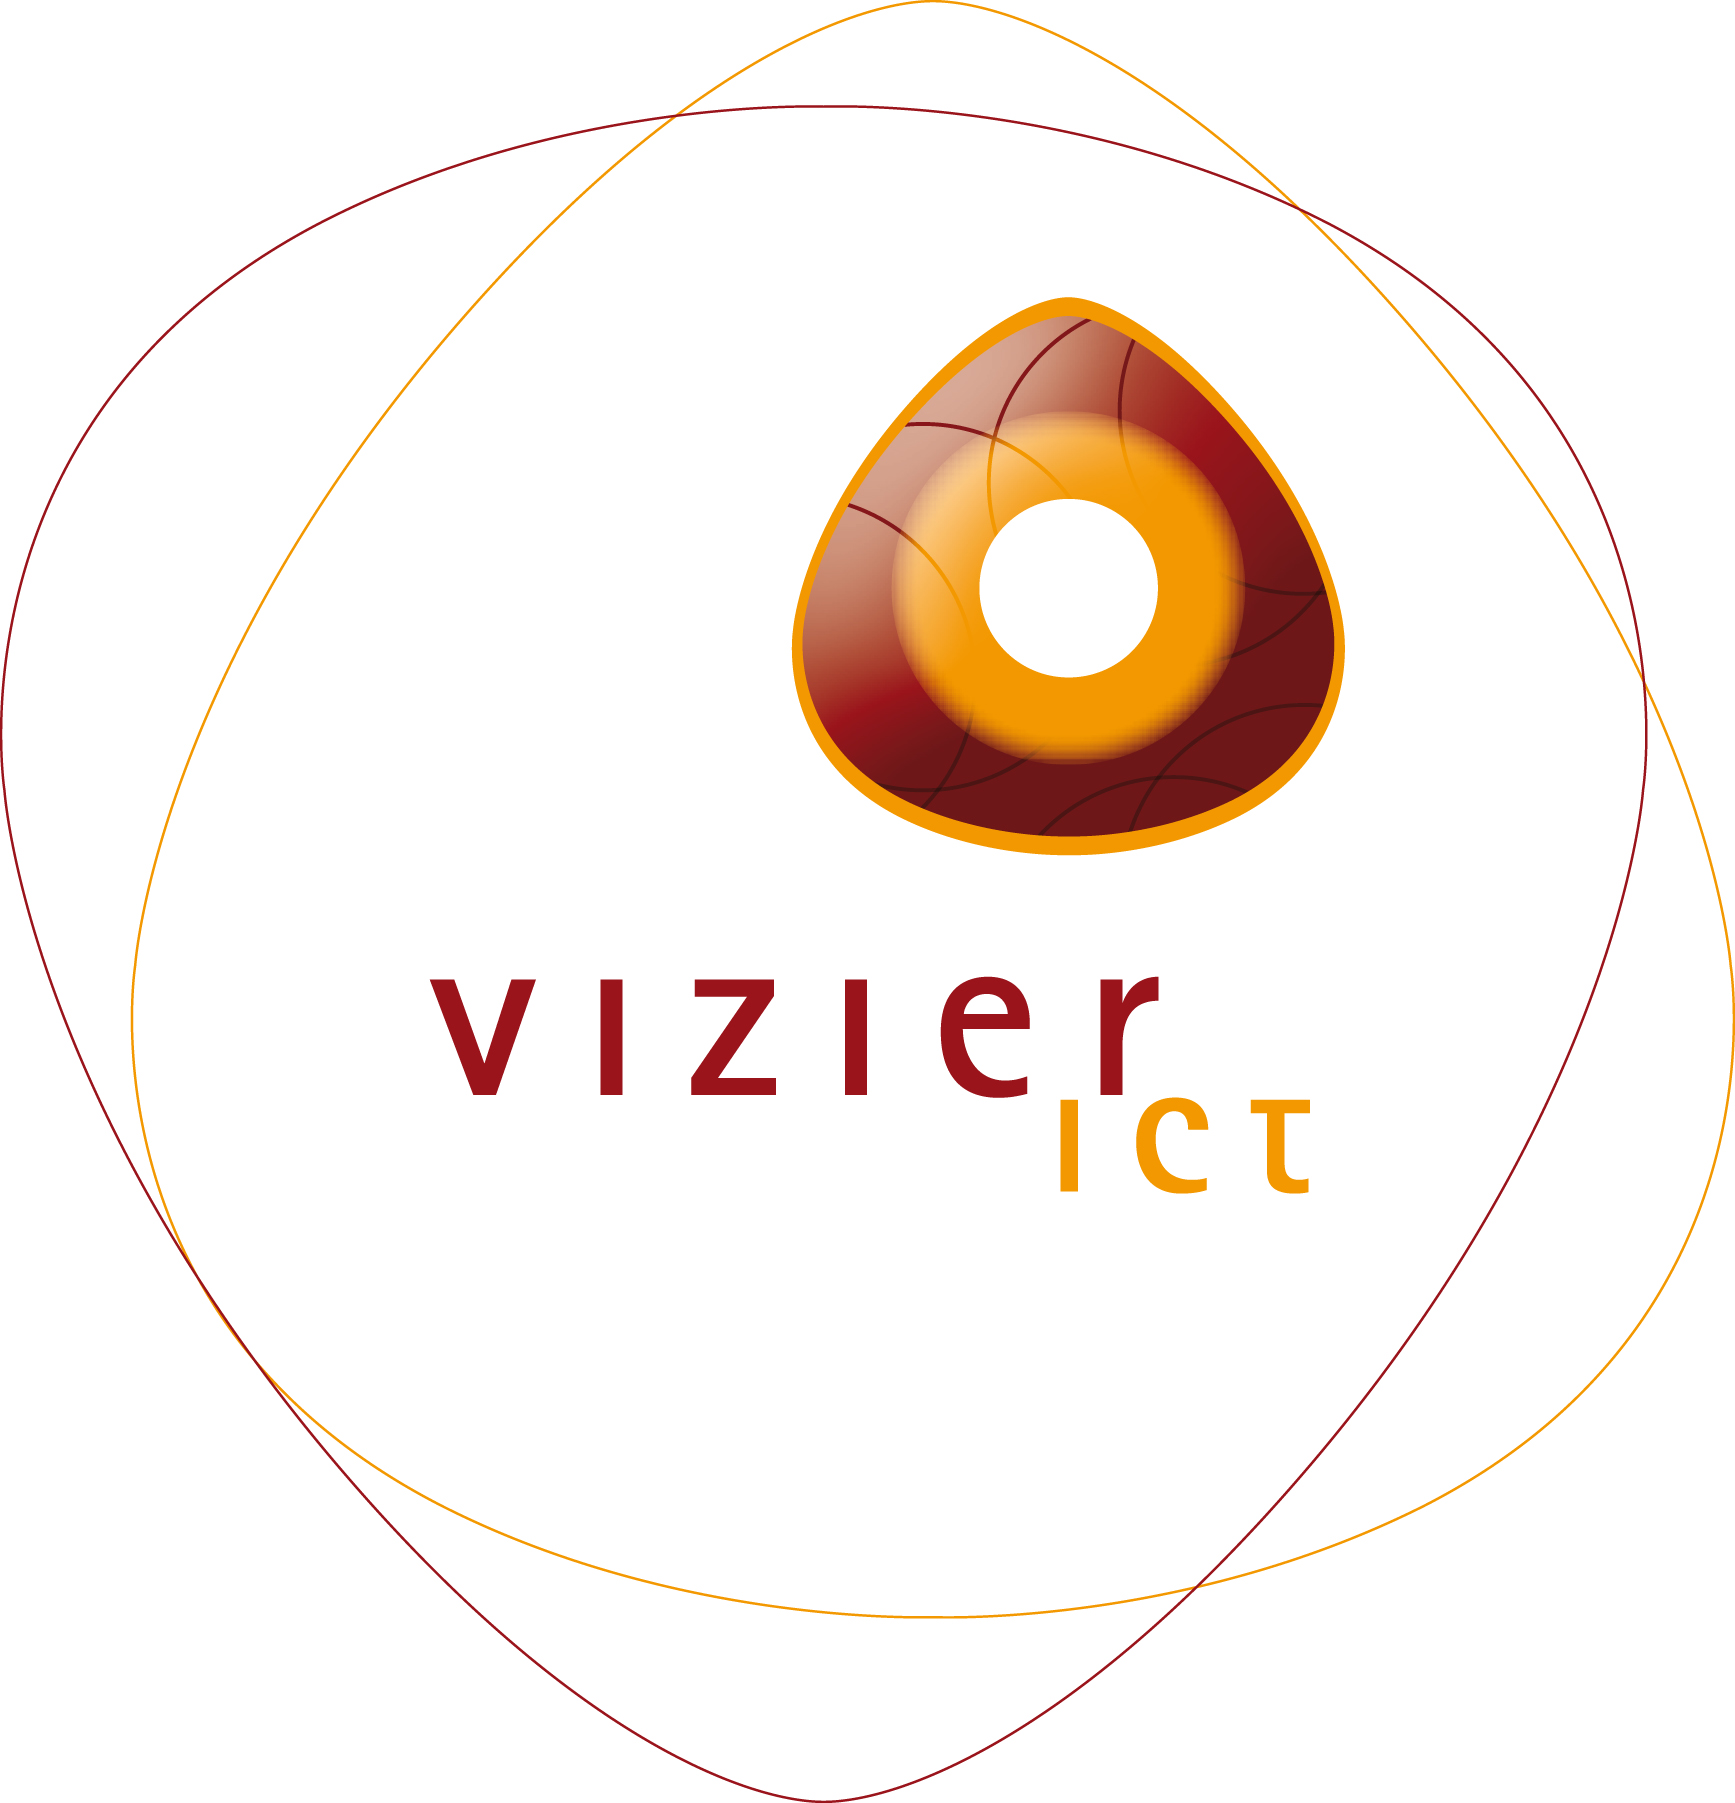 VIZIER ict logo.jpg